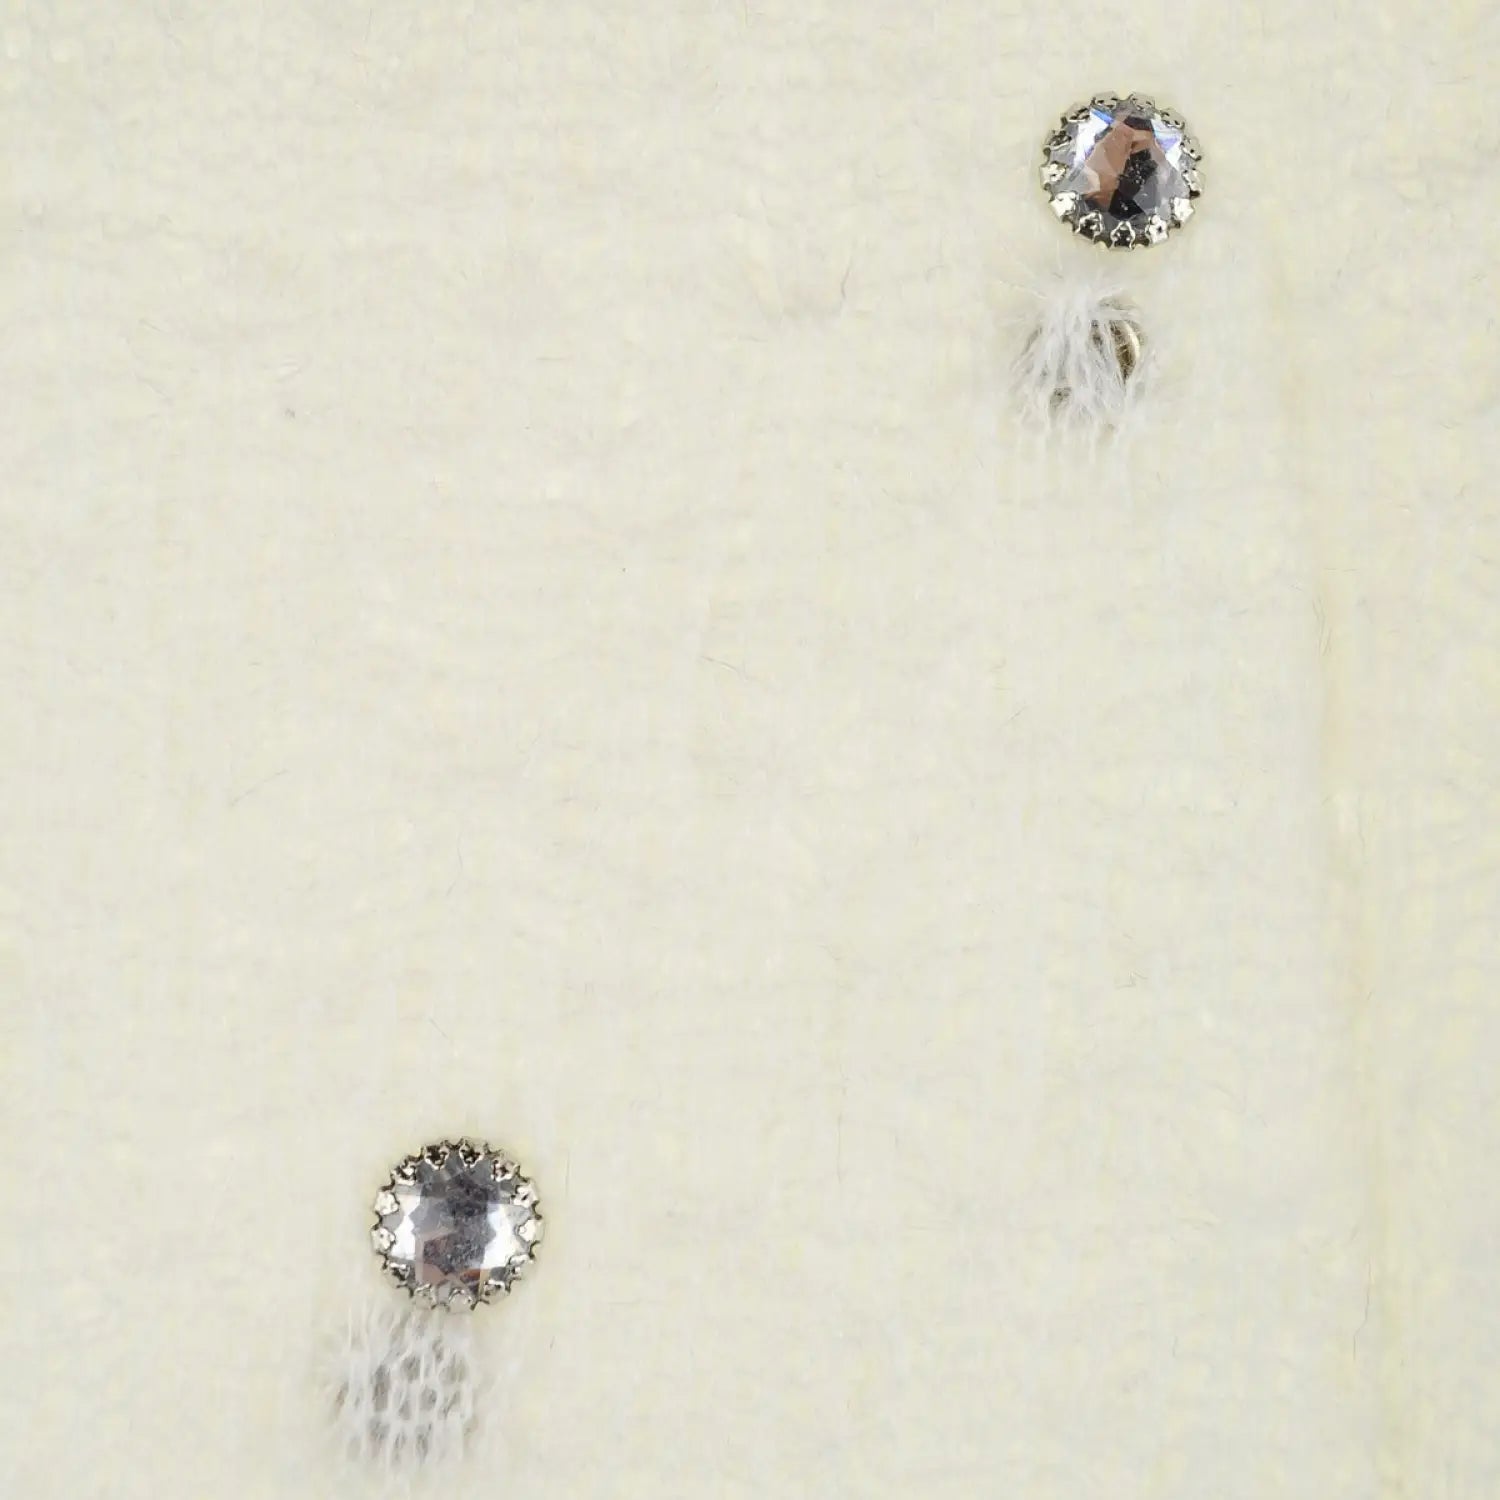 Bohemian Retro Ruffle Diamond Earrings on White Surface